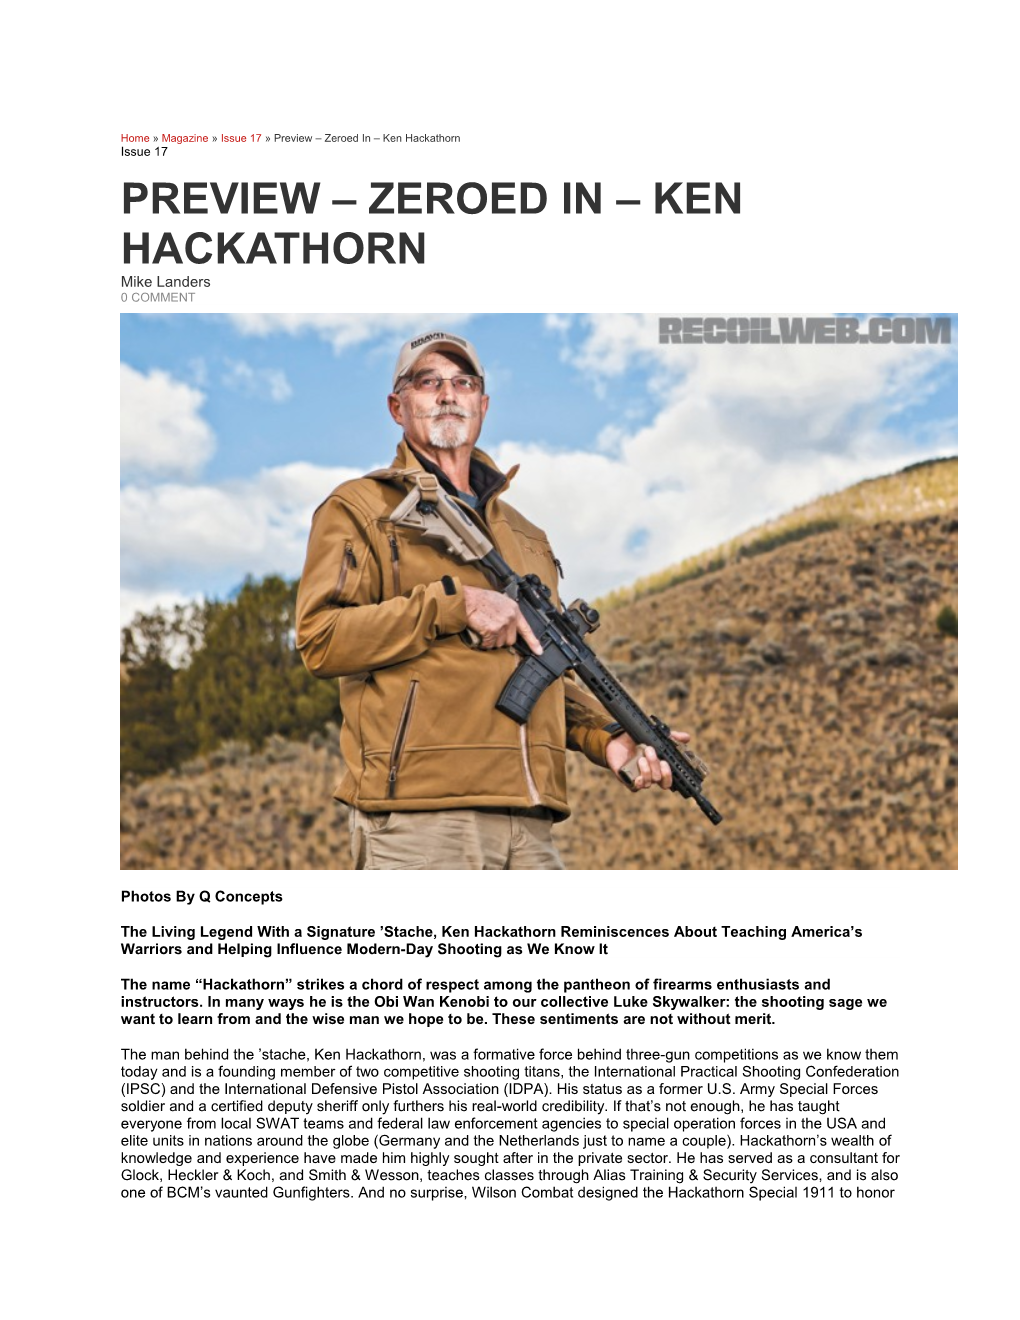 Home Magazine Issue 17 Preview Zeroed in Ken Hackathorn